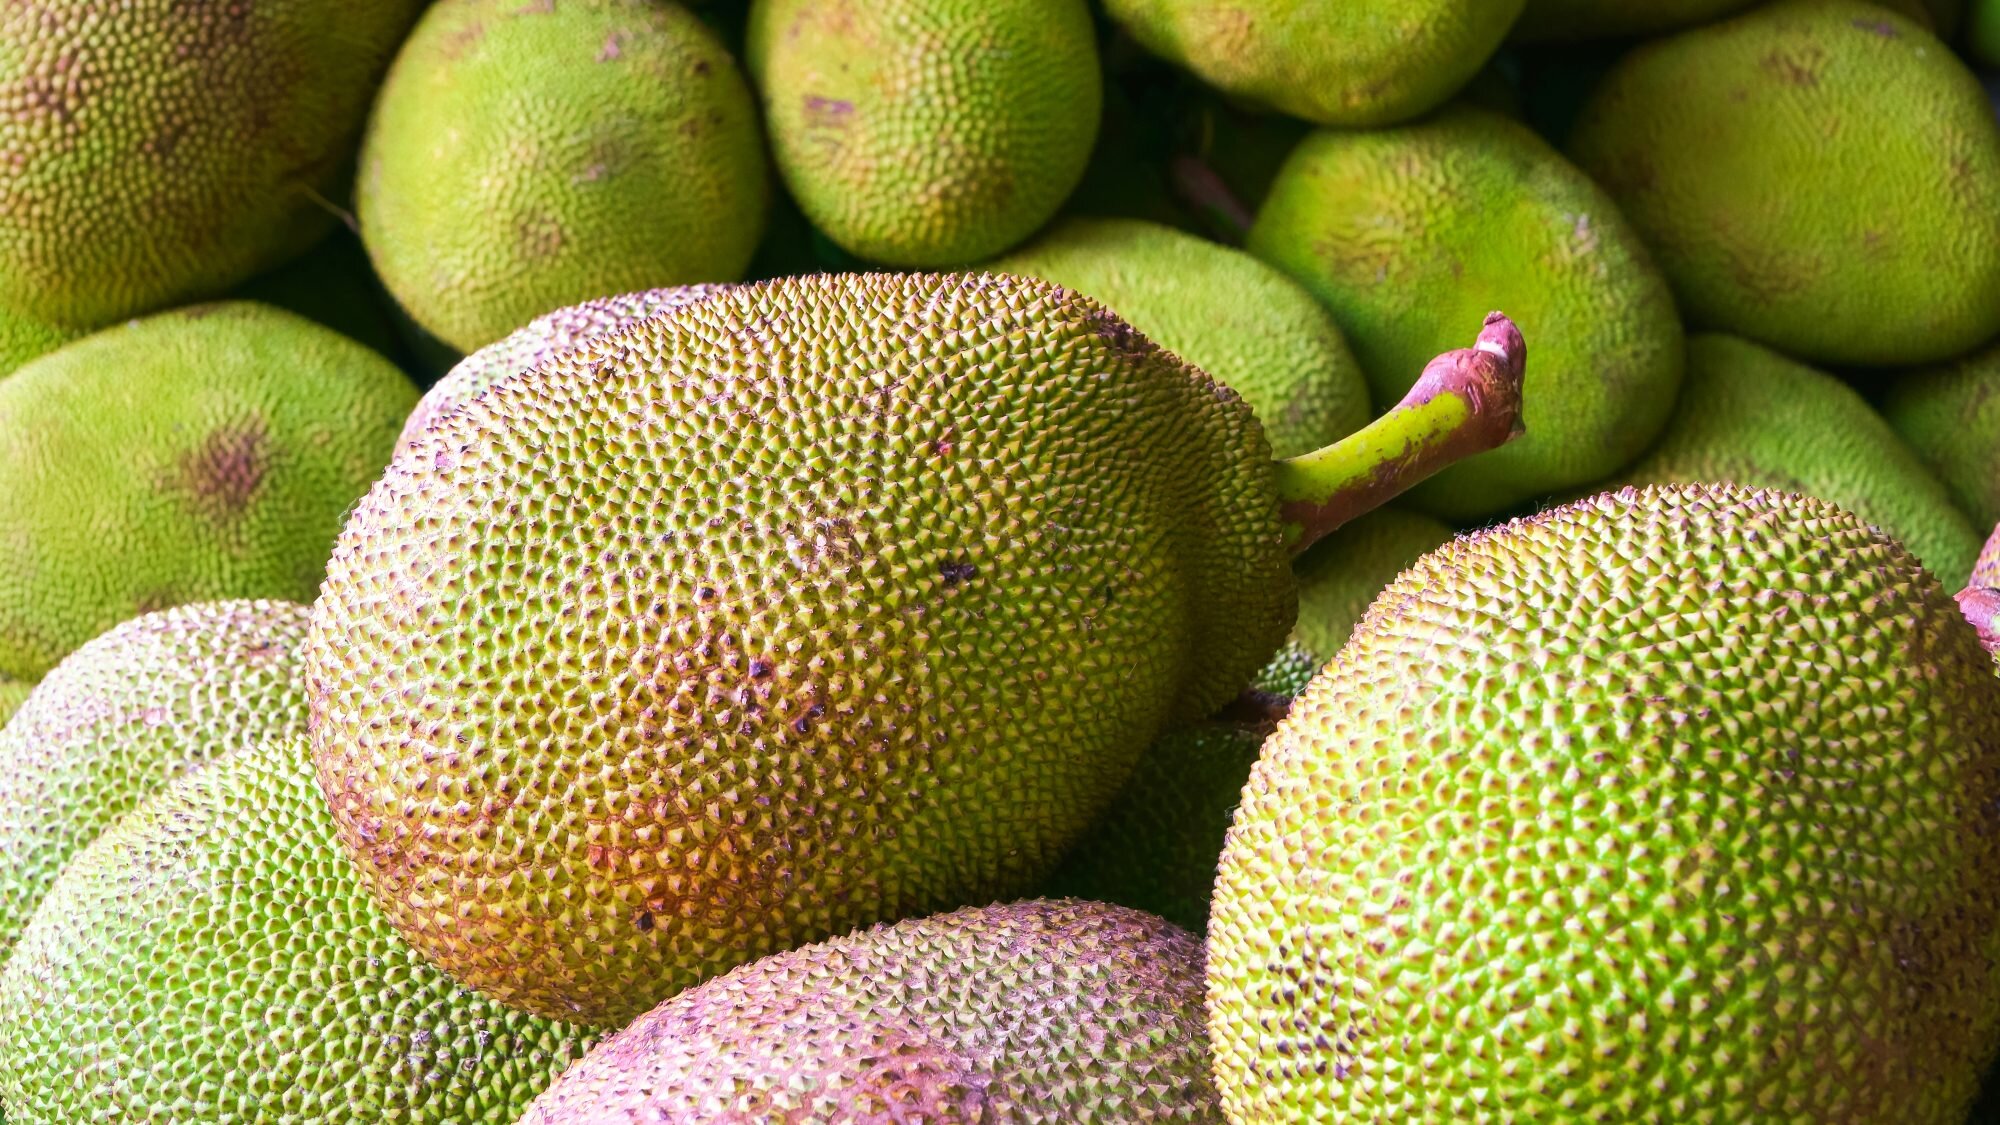 jackfruit farming